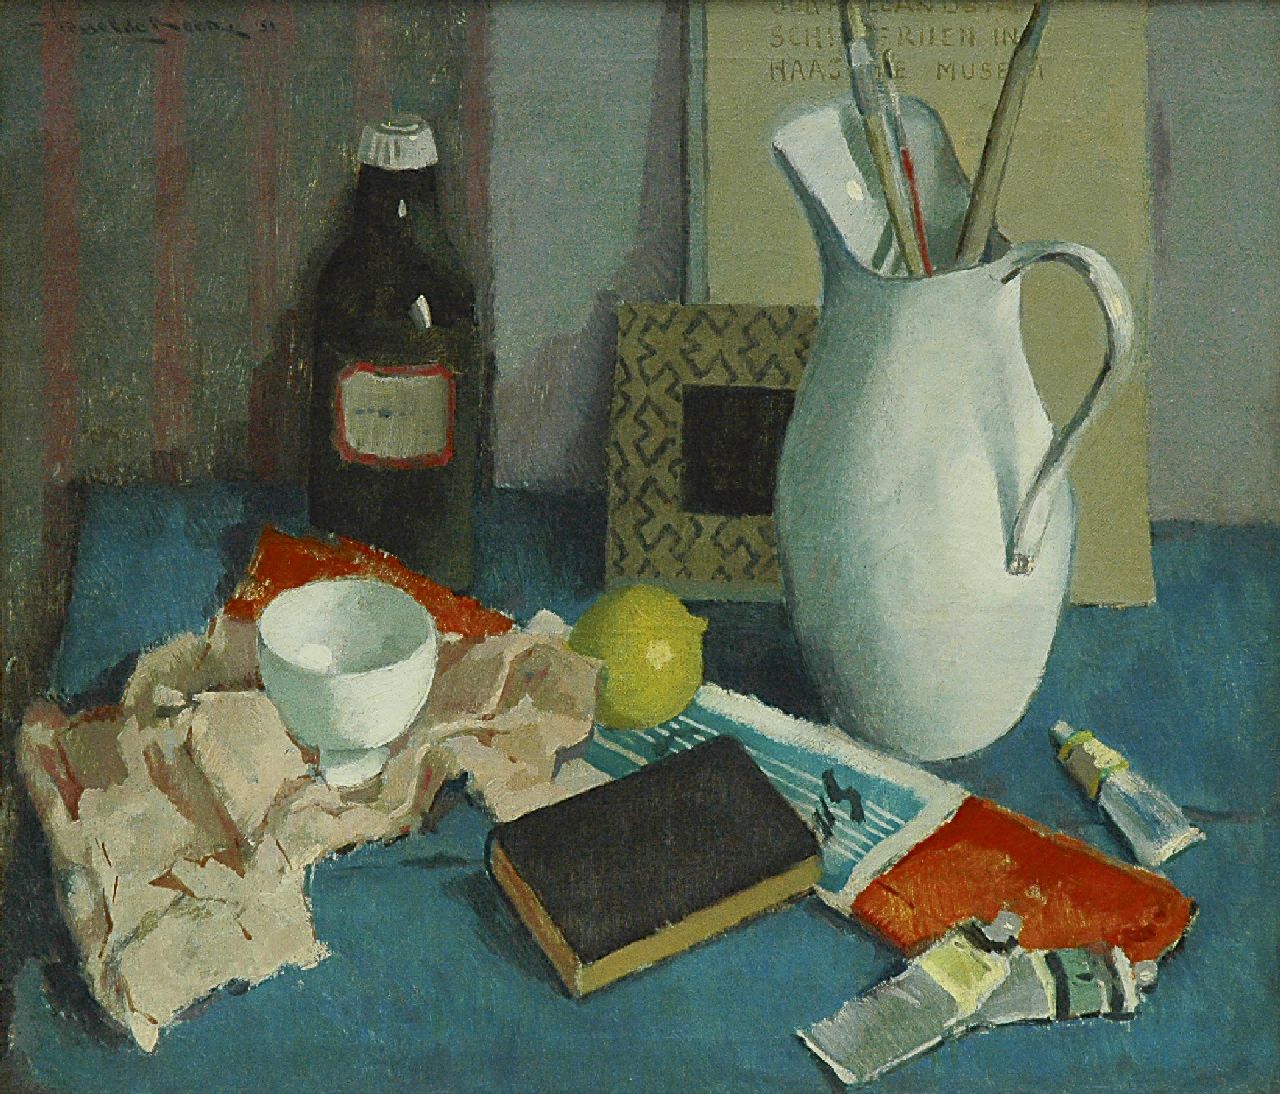 Boer H. de | Hessel de Boer, Still life with a white jug, Öl auf Leinwand 60,4 x 70,3 cm, signed u.l. und dated '51